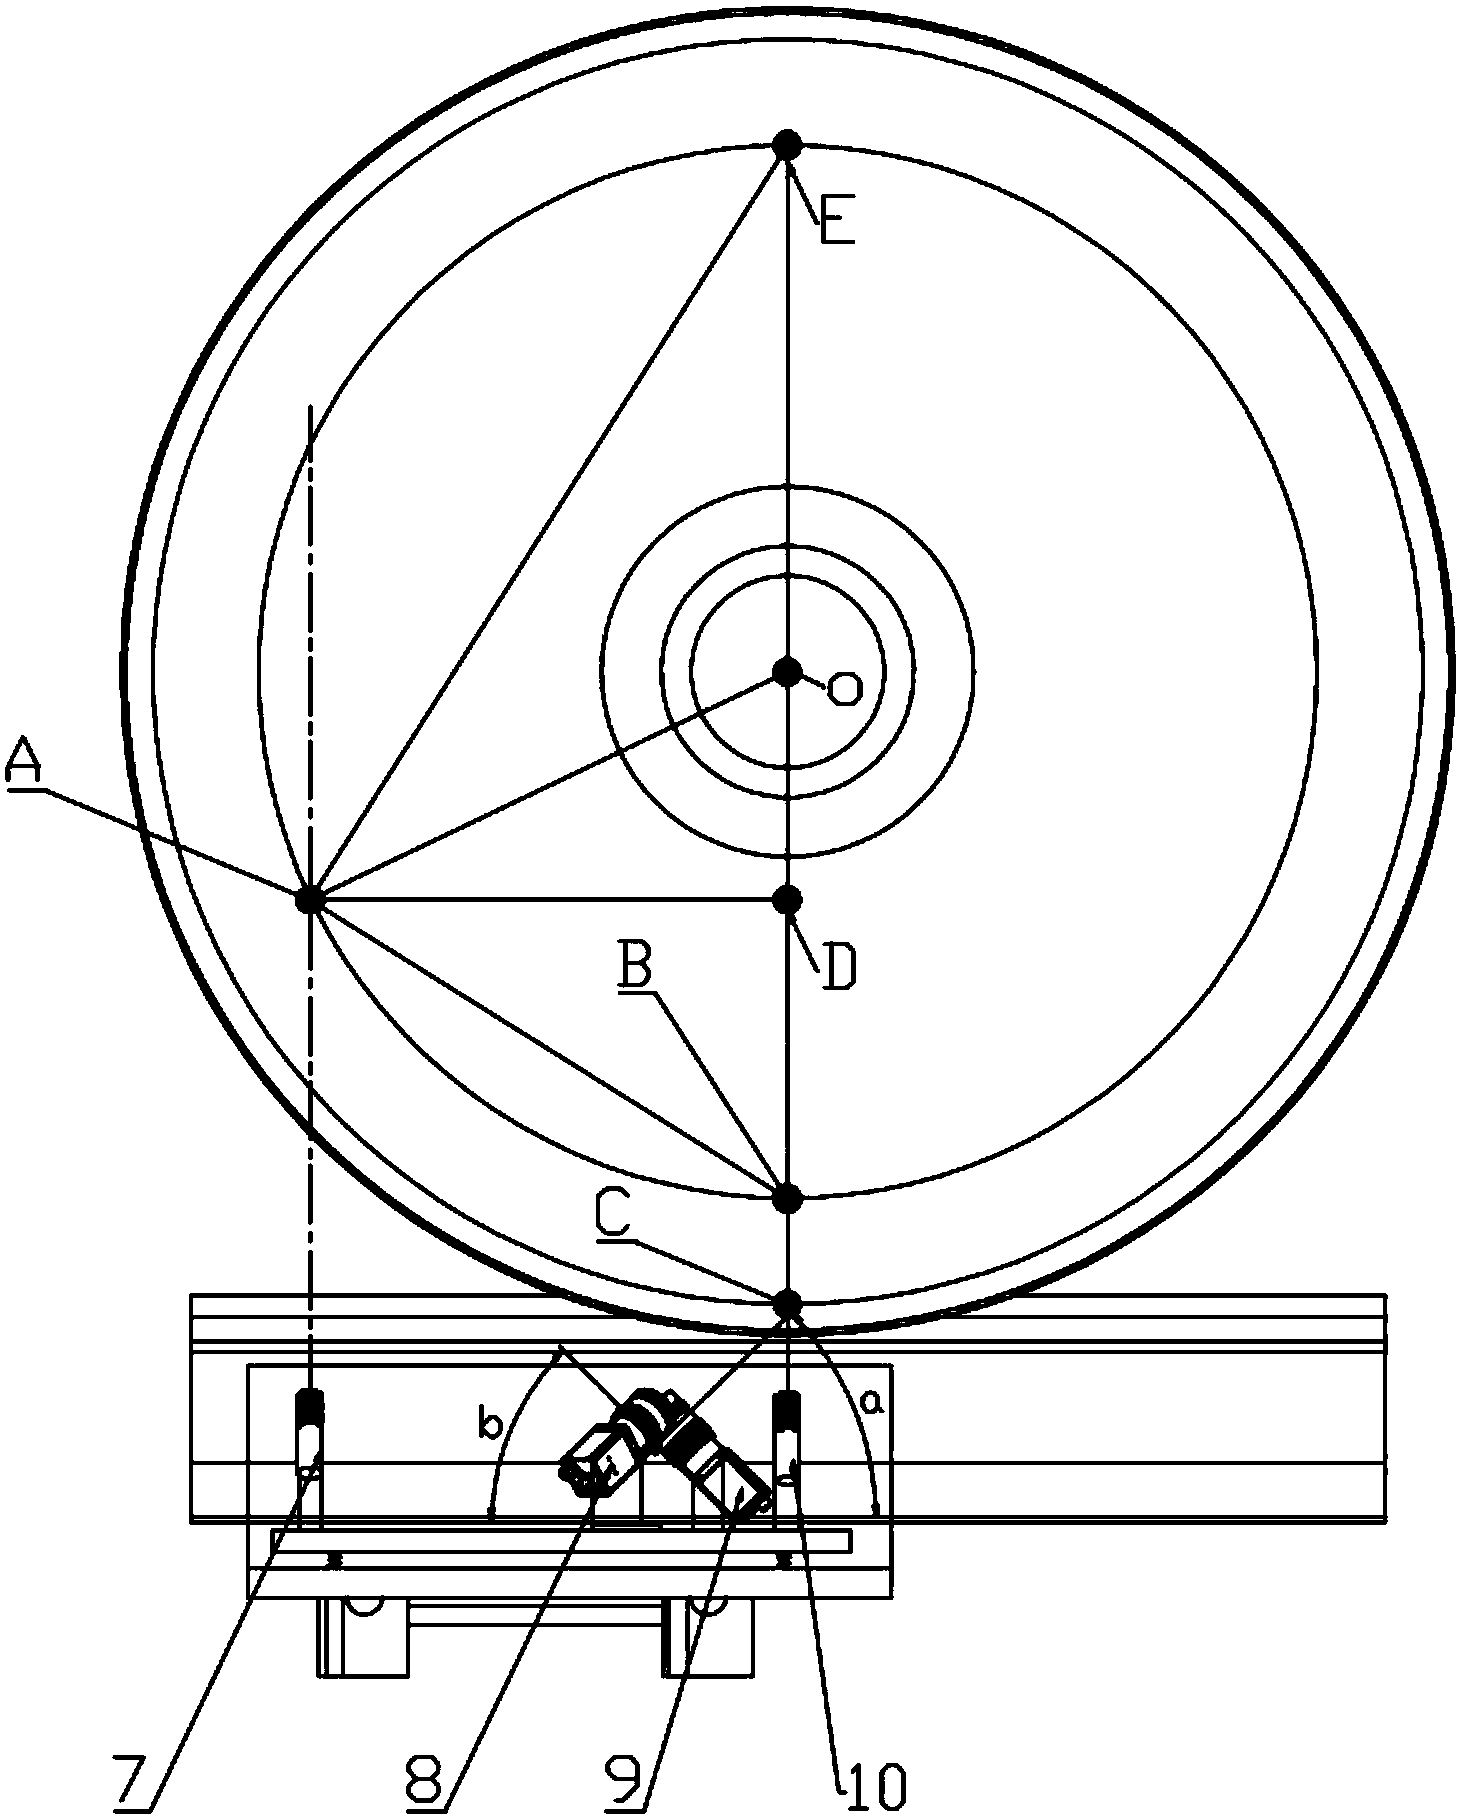 Railway wheel diameter dynamic measuring device and method